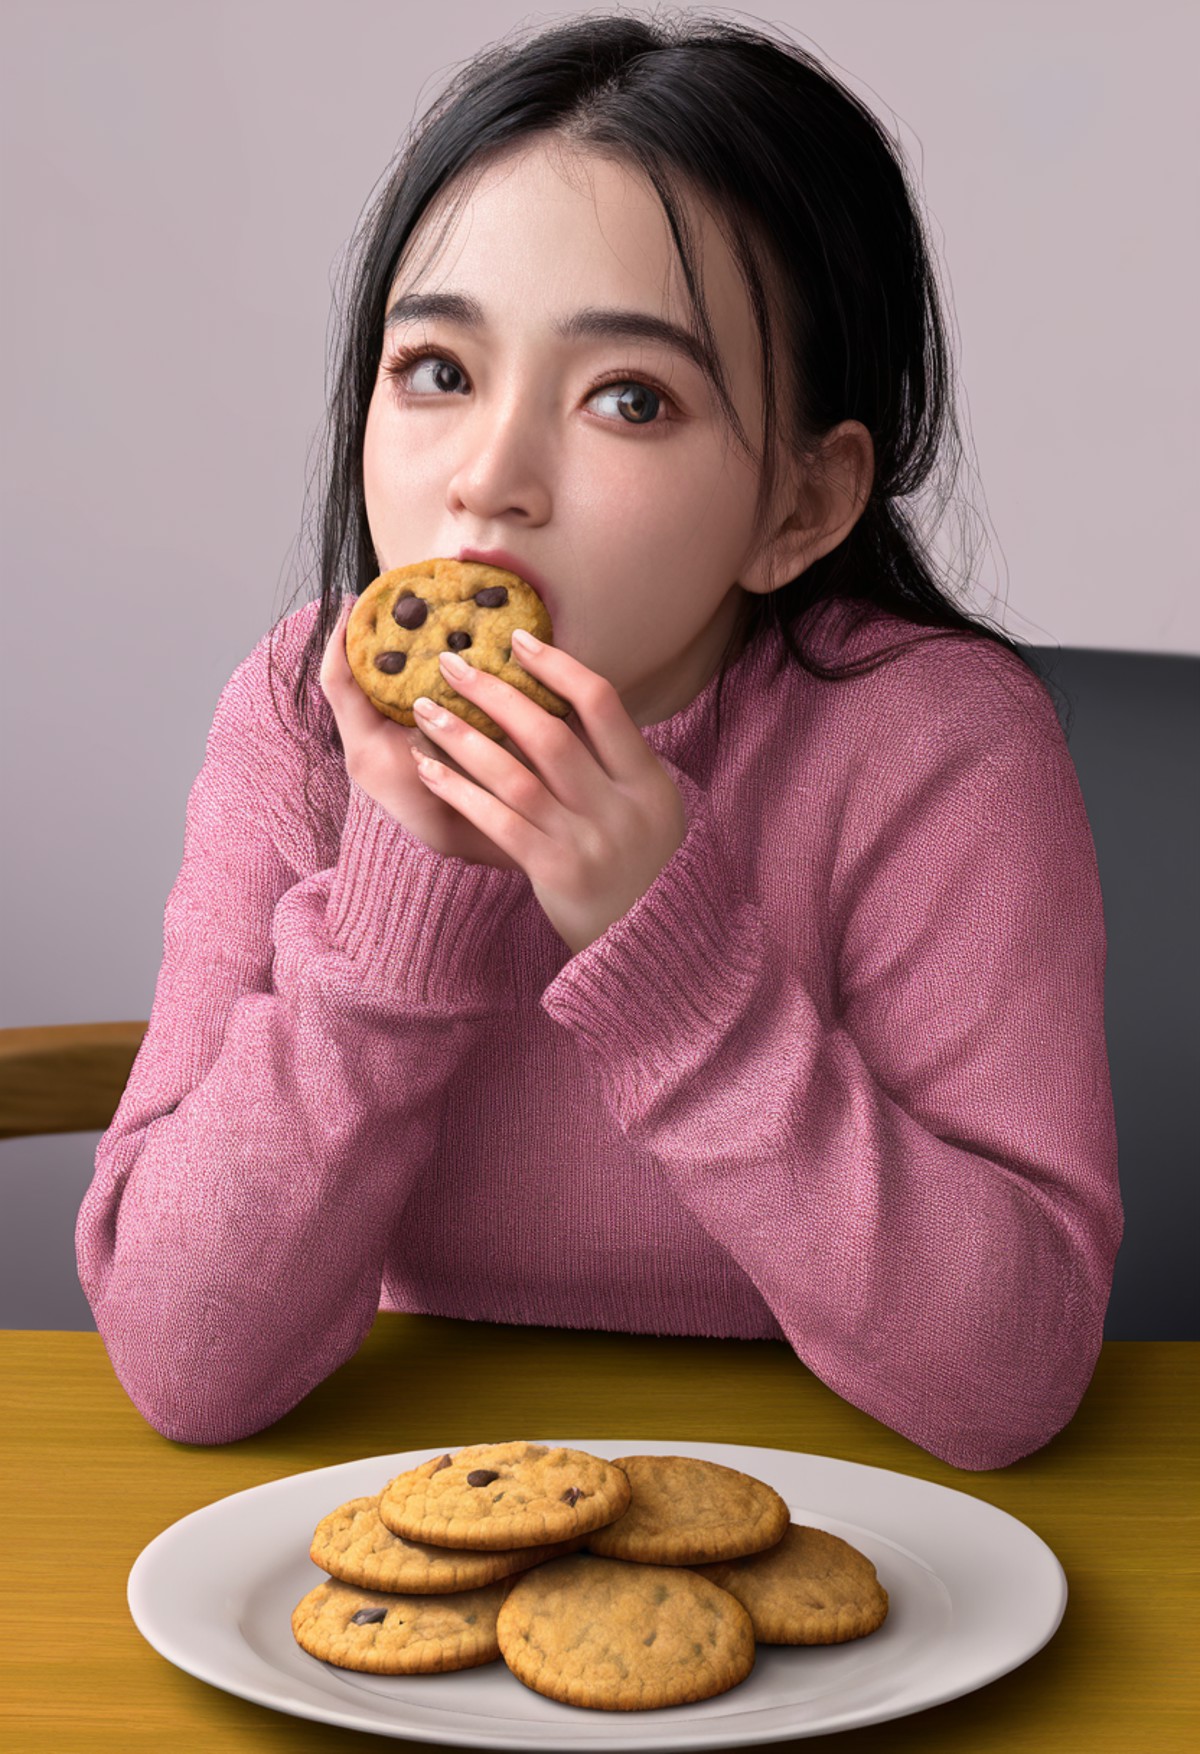 hdr 8k analog photo, A girl eating cookies.